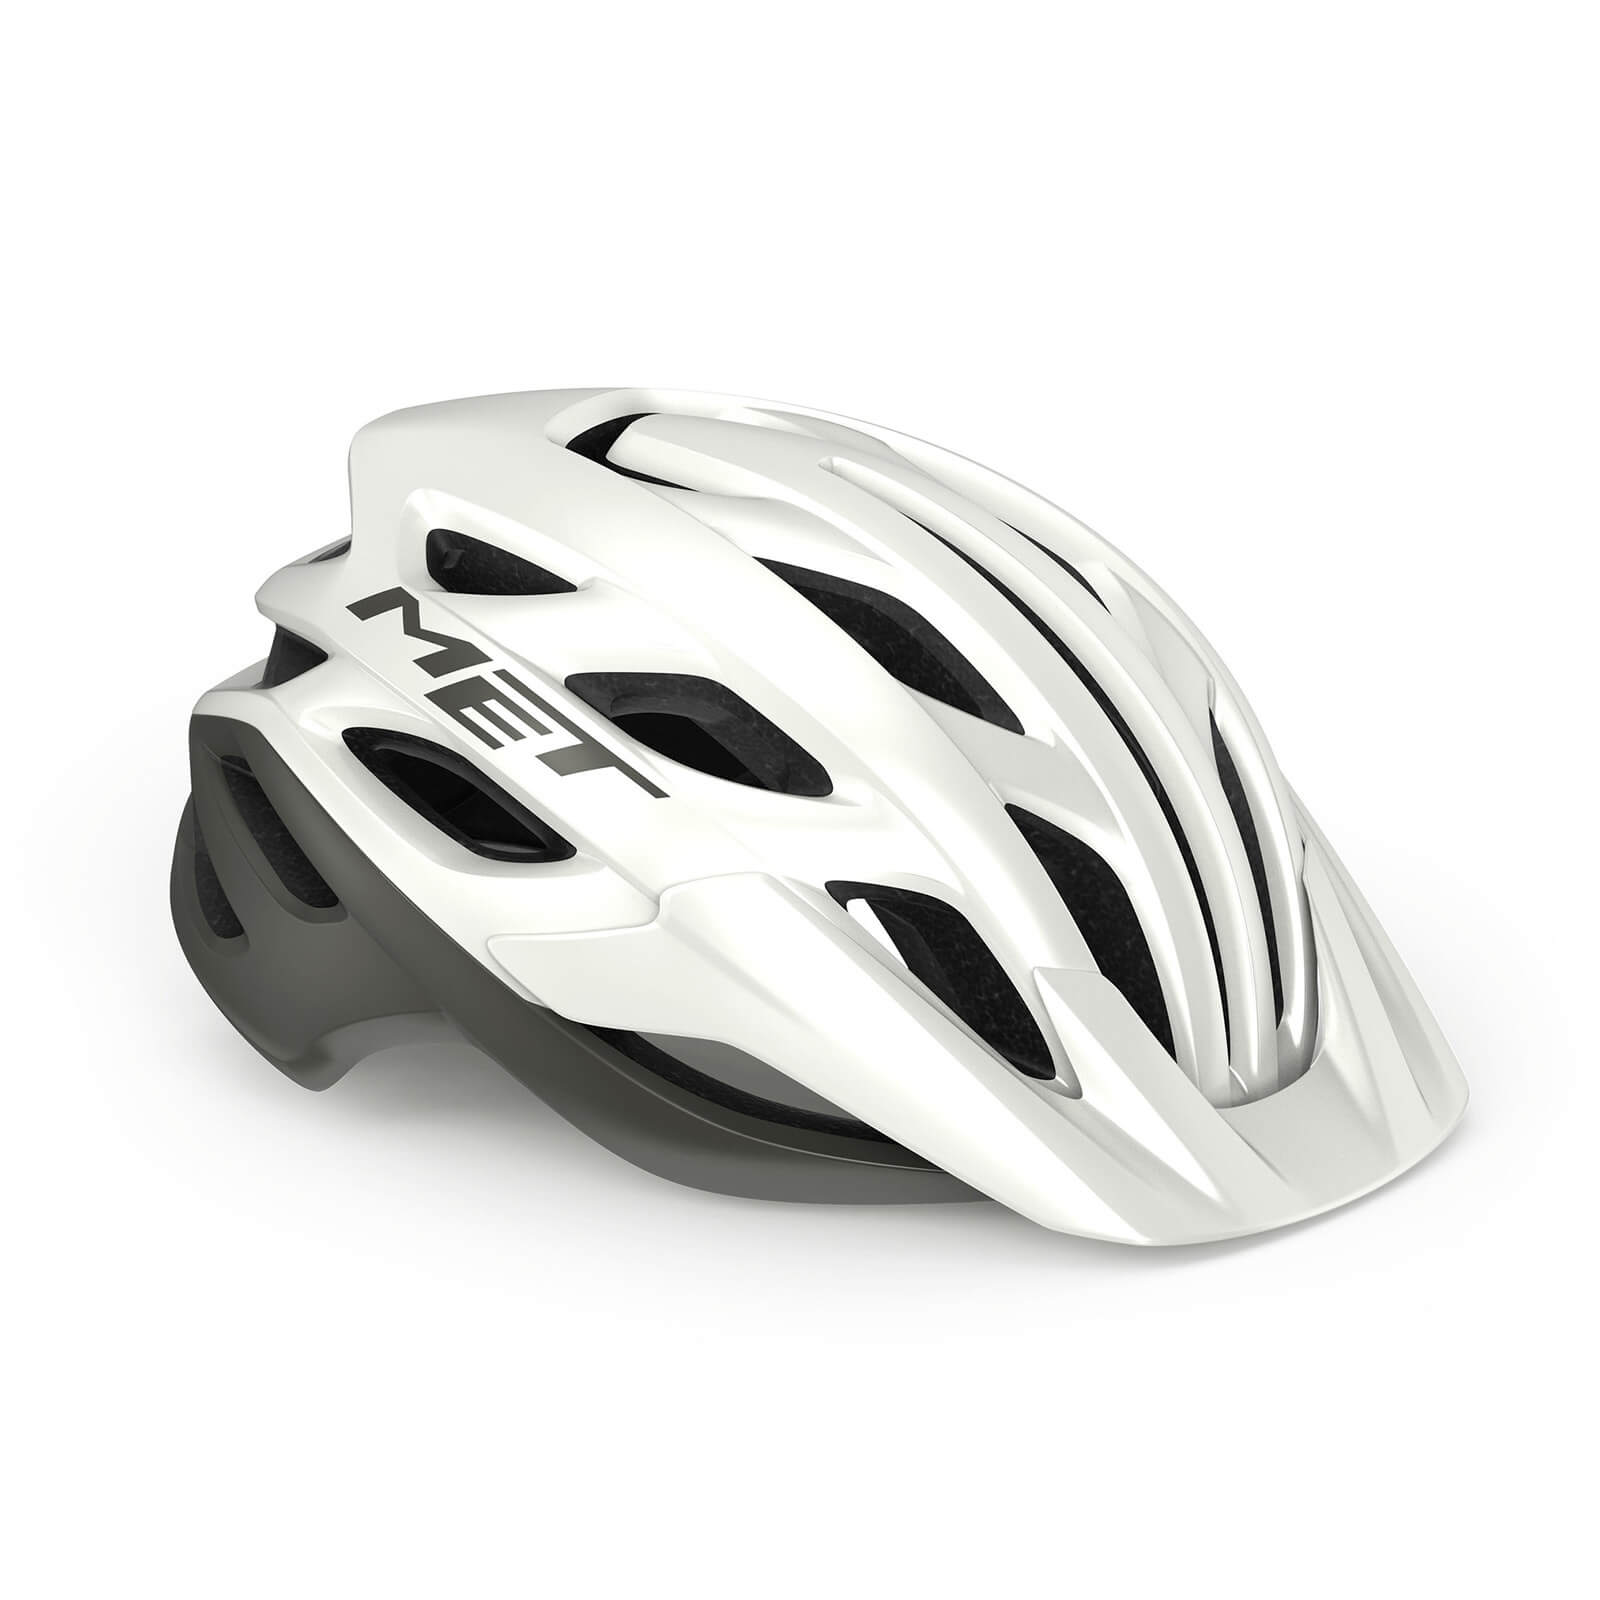 MET Veleno MIPS MTB Helmet - S - White/Grey